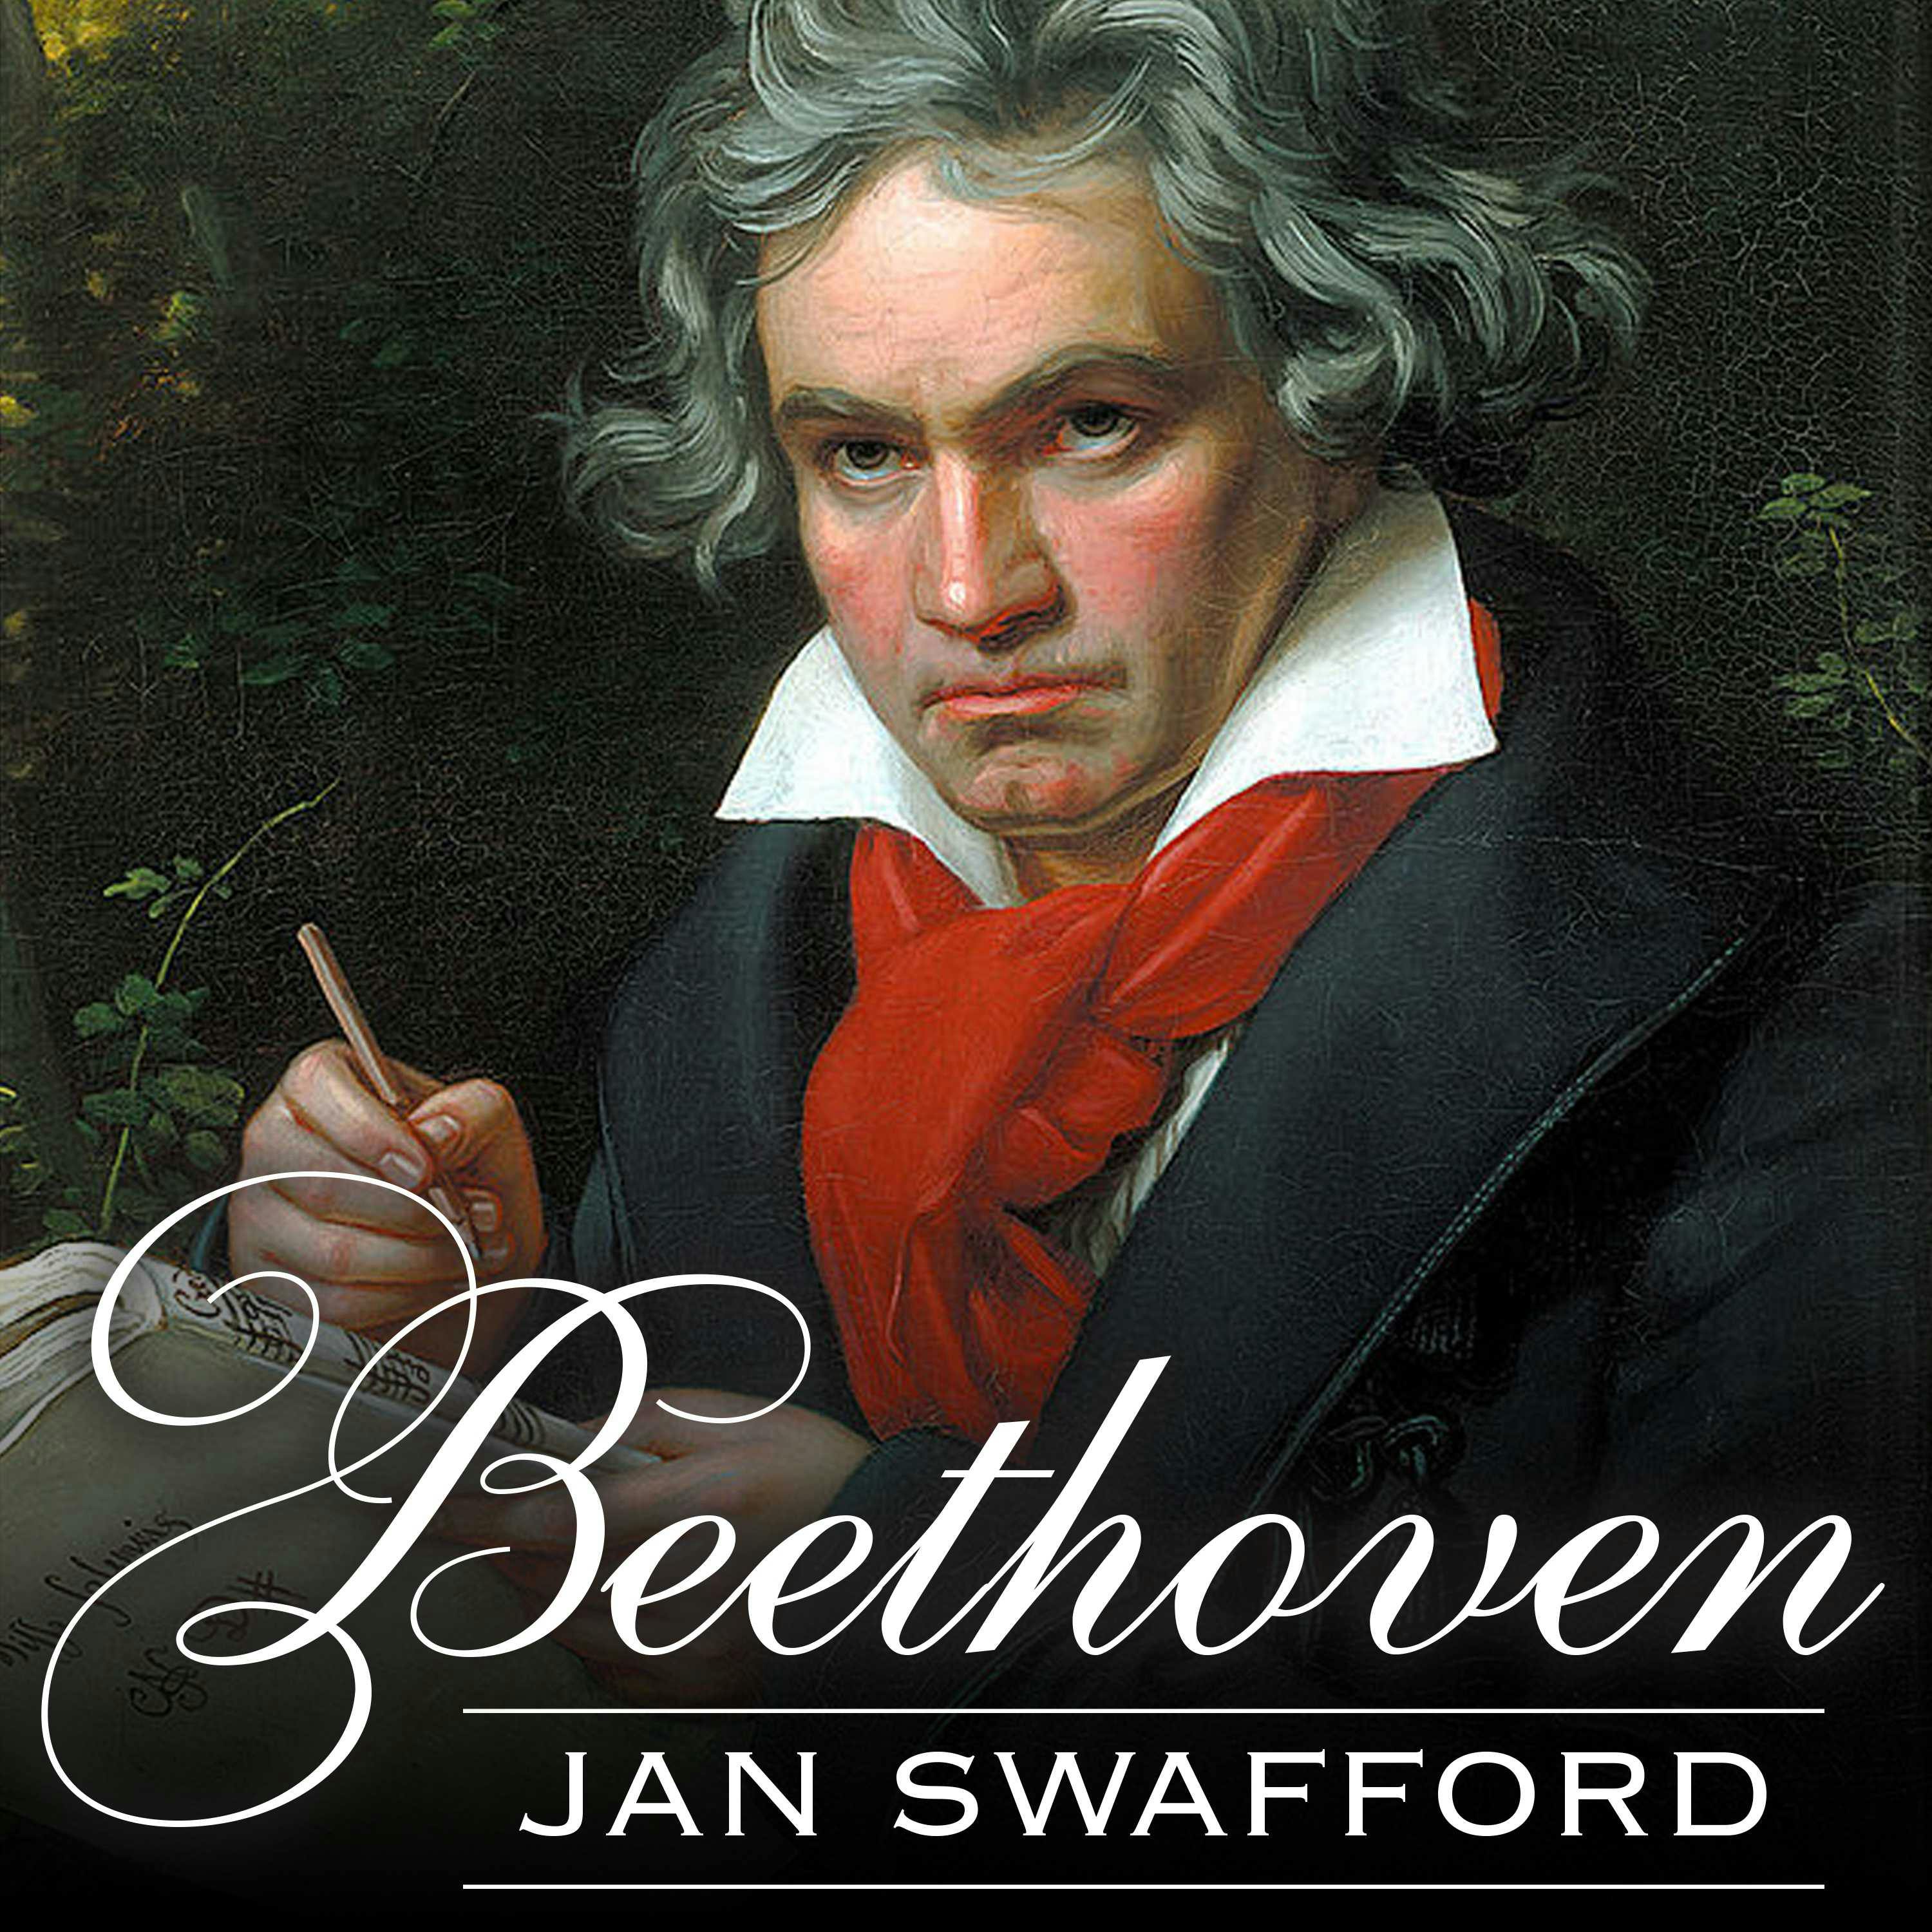 Beethoven: Anguish and Triumph - Jan Swafford